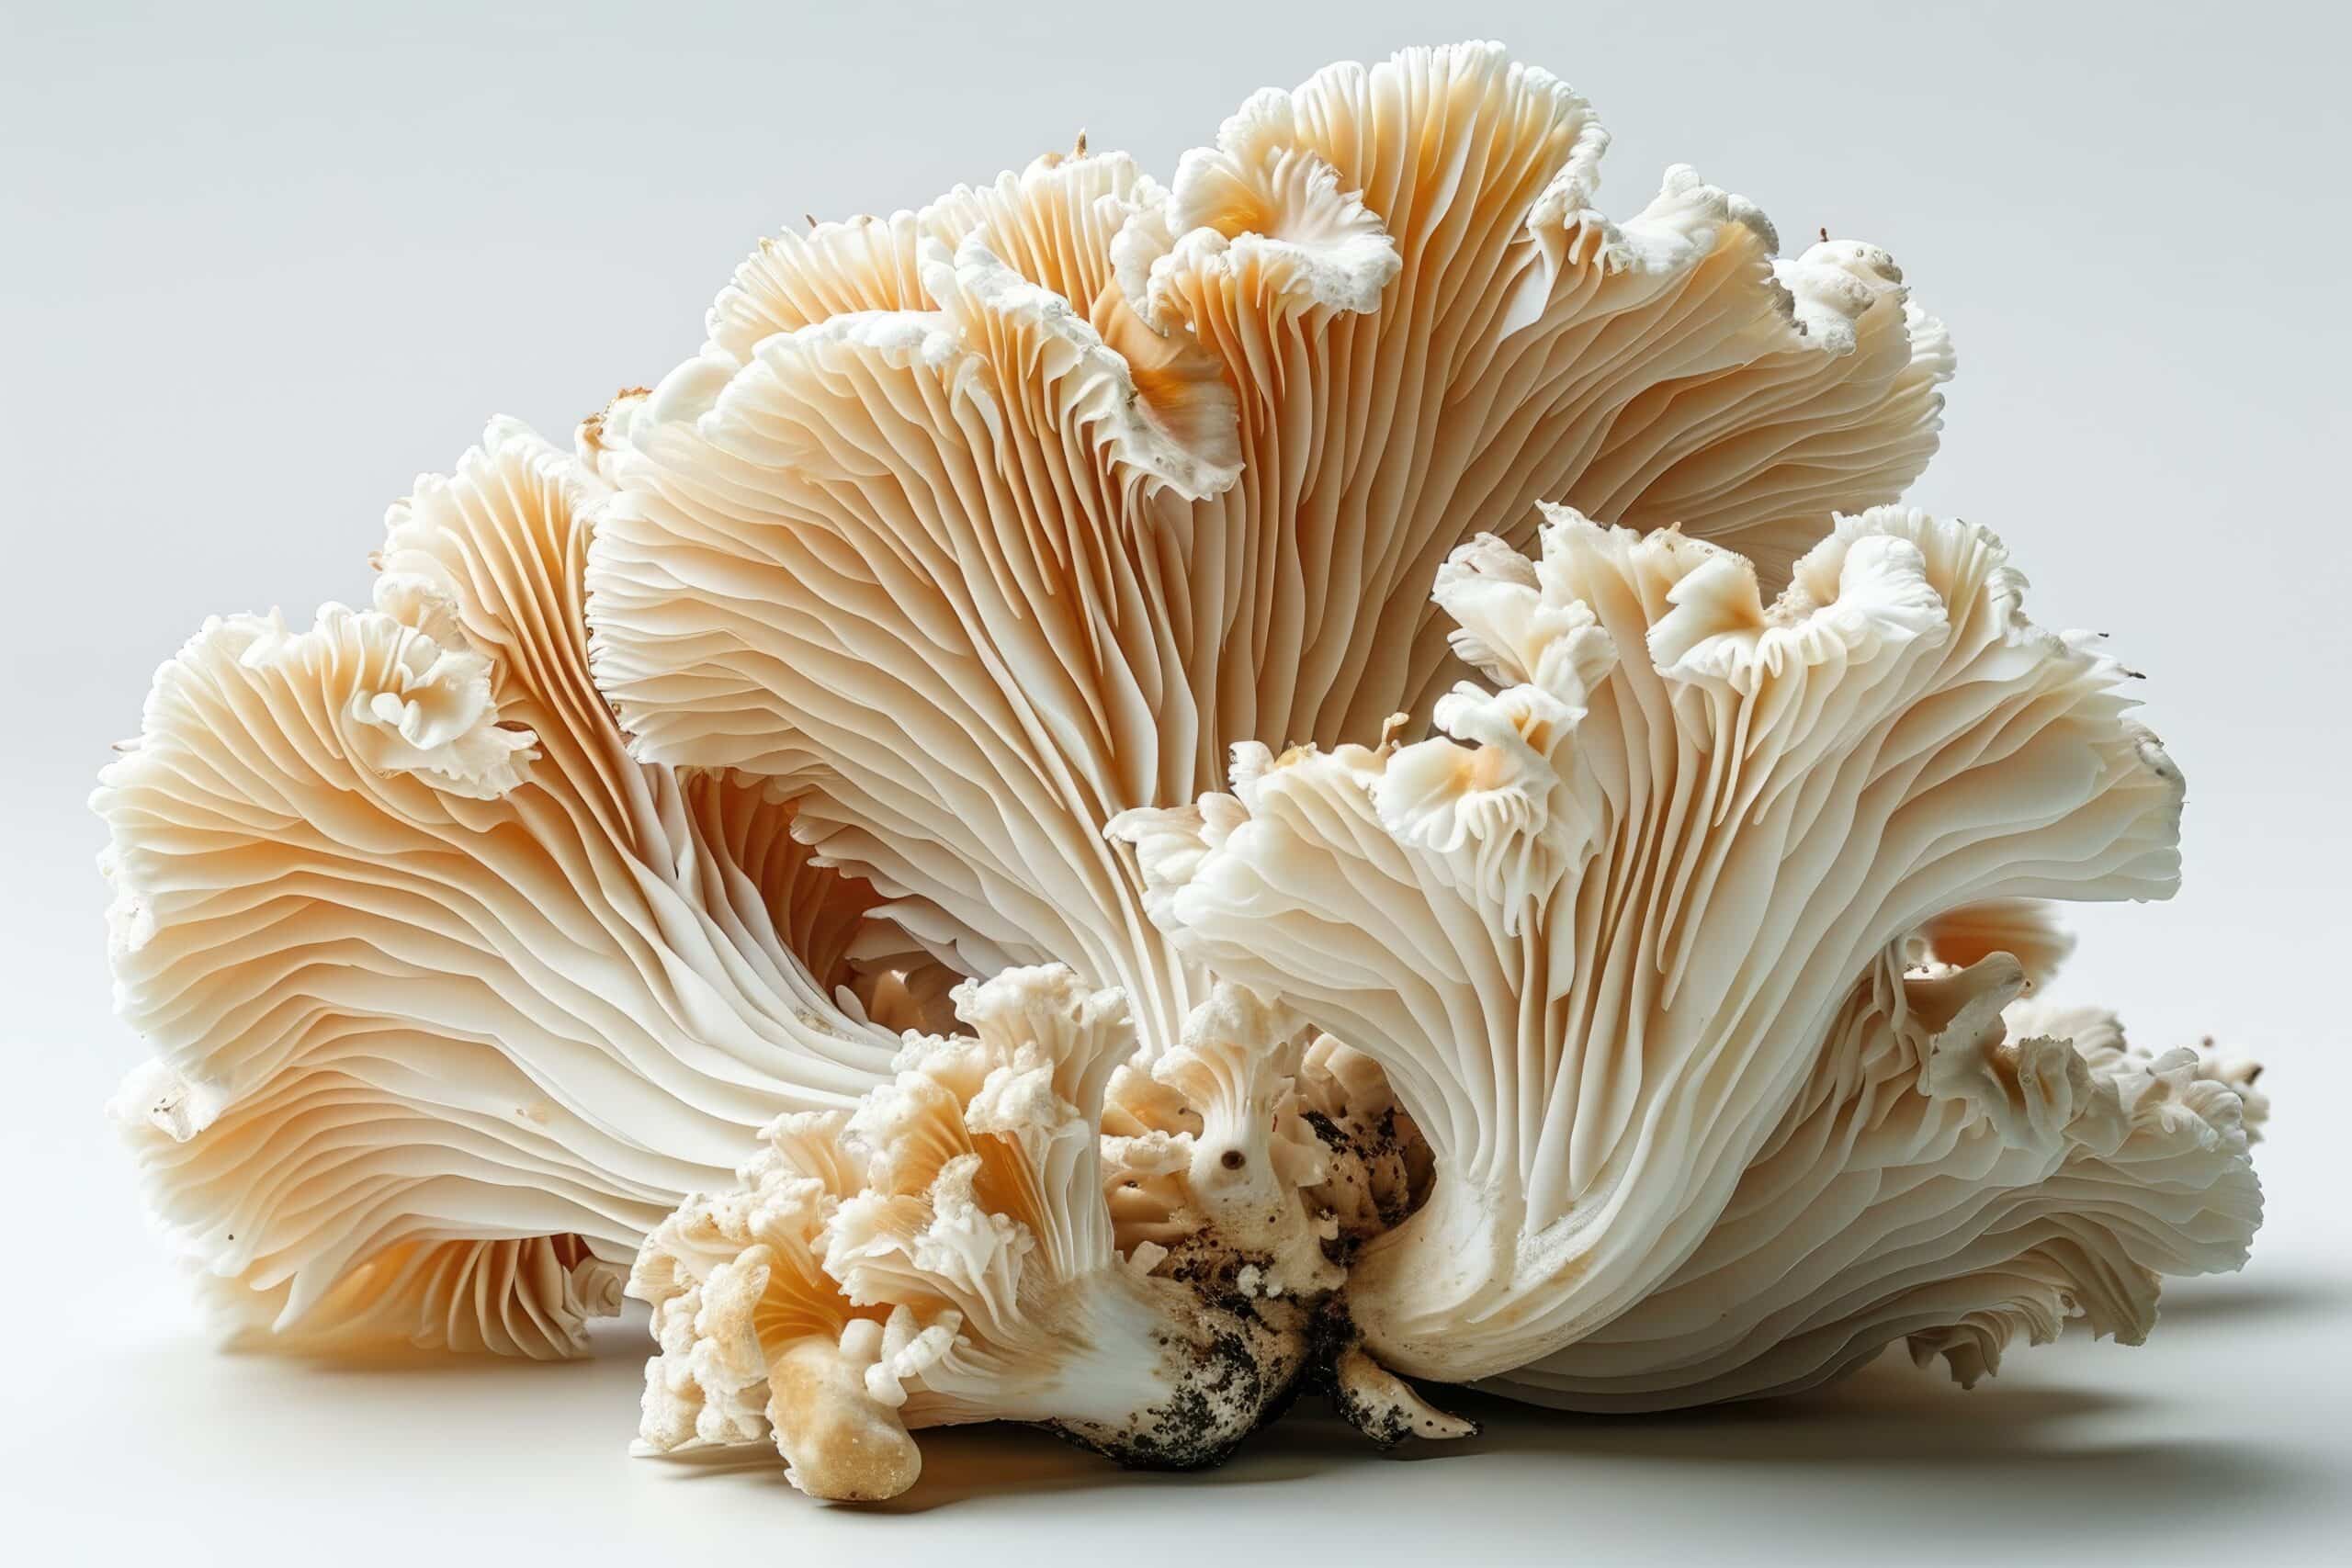 growmyownhealthfood.com : What enables a mushroom to nourish itself during growth?